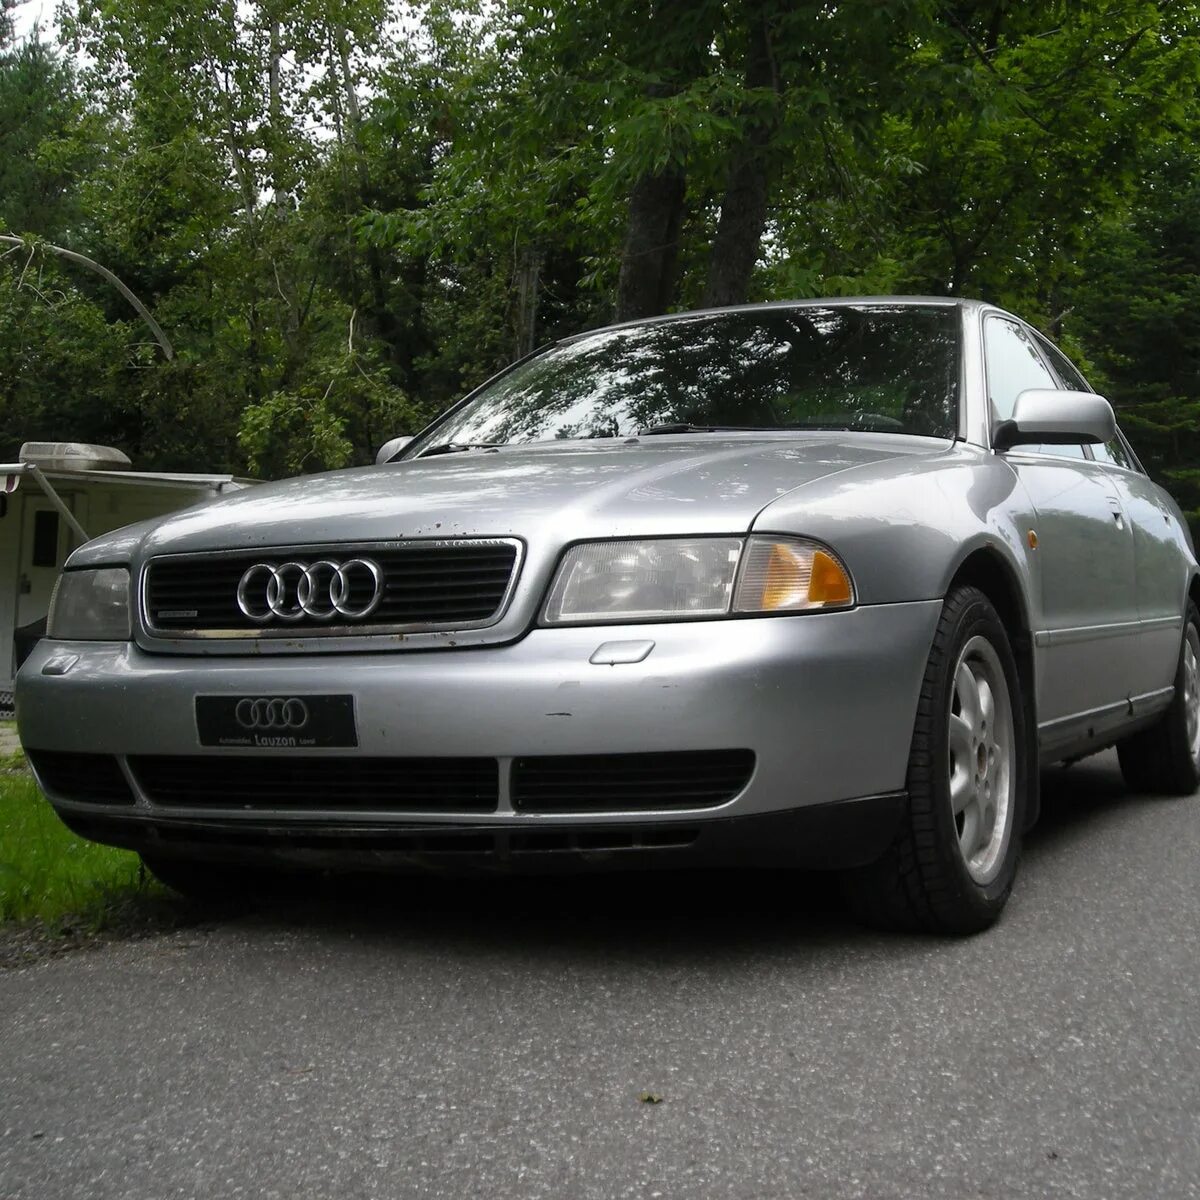 Купить ауди 1999. Audi a4 1999. Ауди 4.4 кватро 1999. Ауди а4 1999. Audi a4 1999 год.